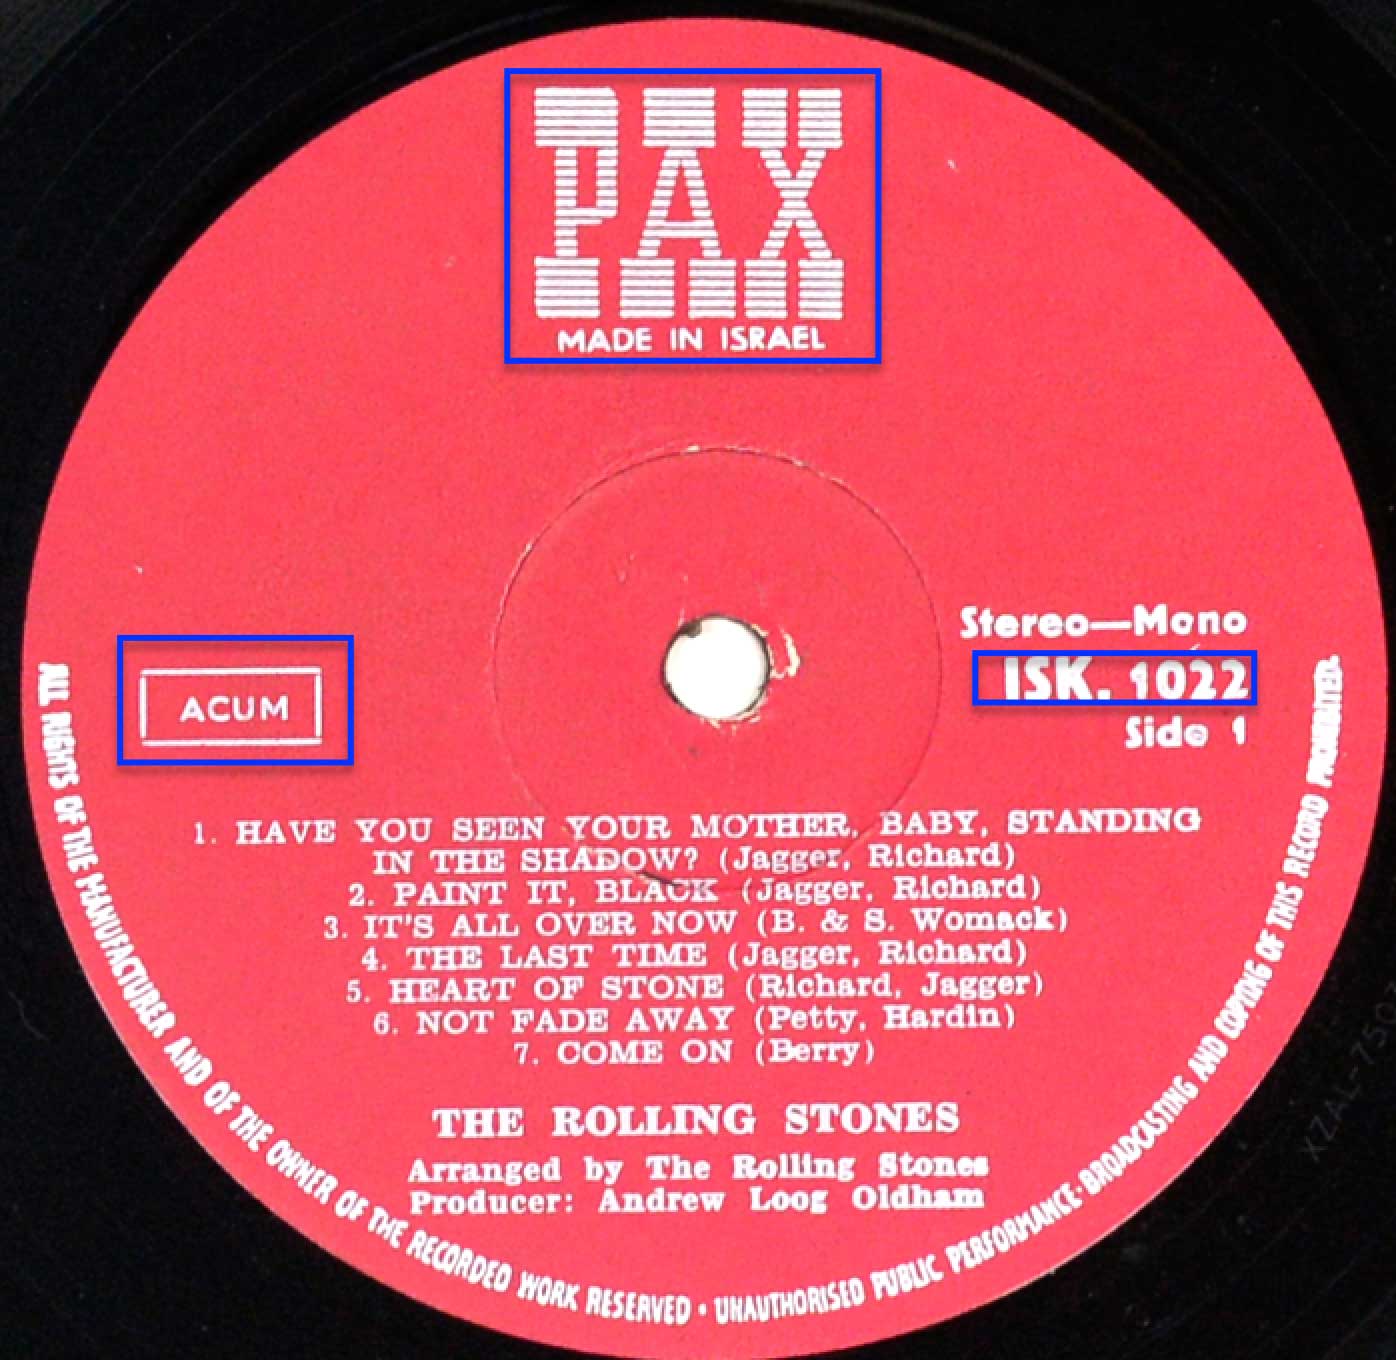 Enlargement of Record Label